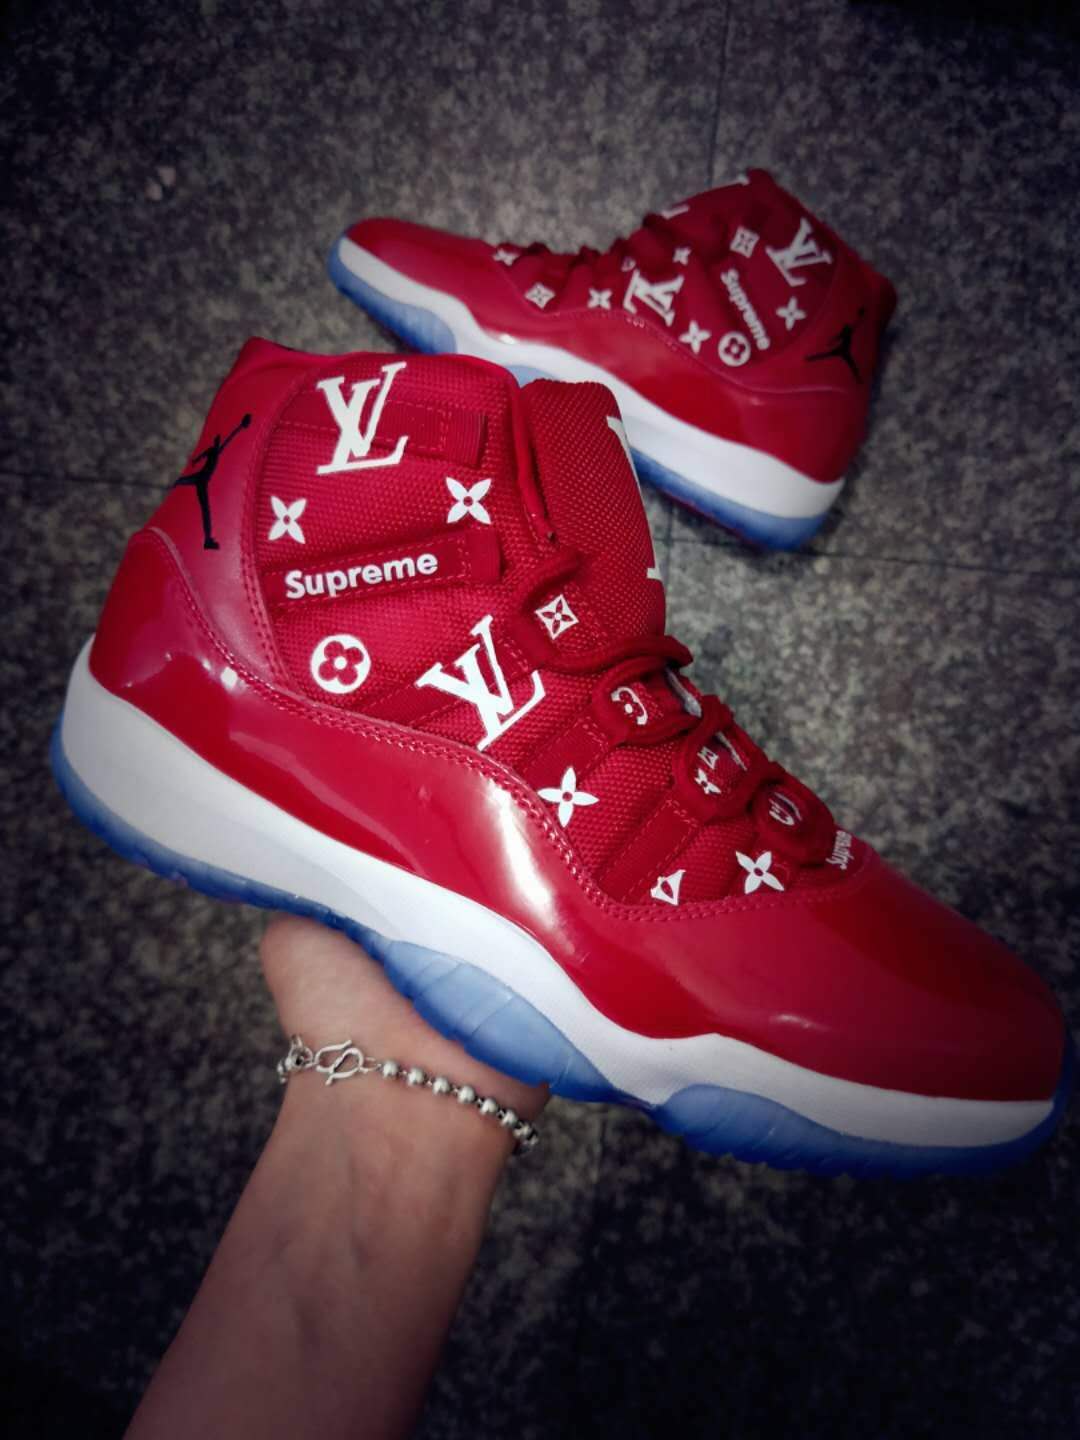 Jordans 11 LV Red Color Shoes